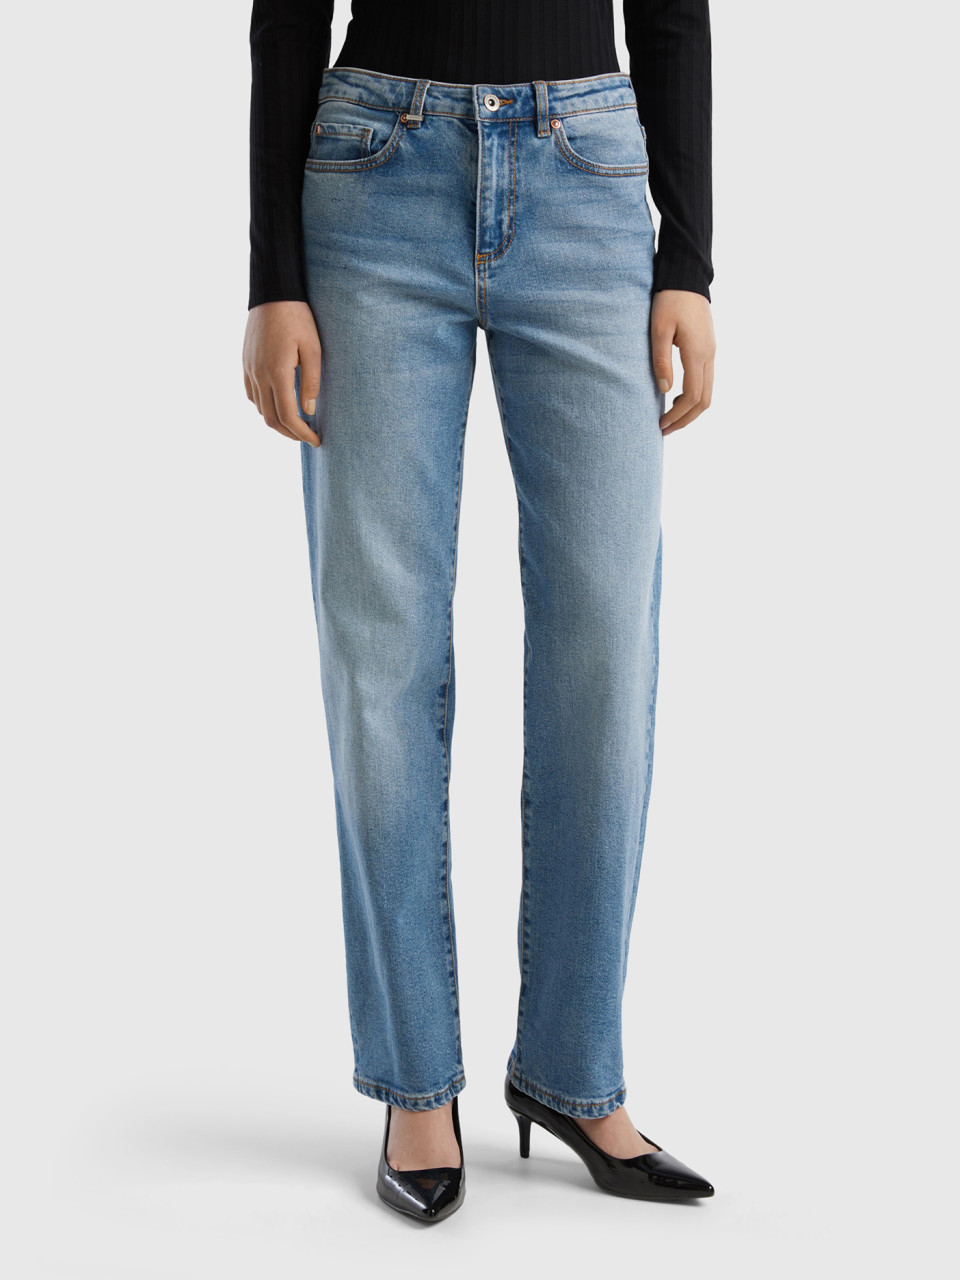 Benetton, Jeans Straight-fit, Azurblau, female